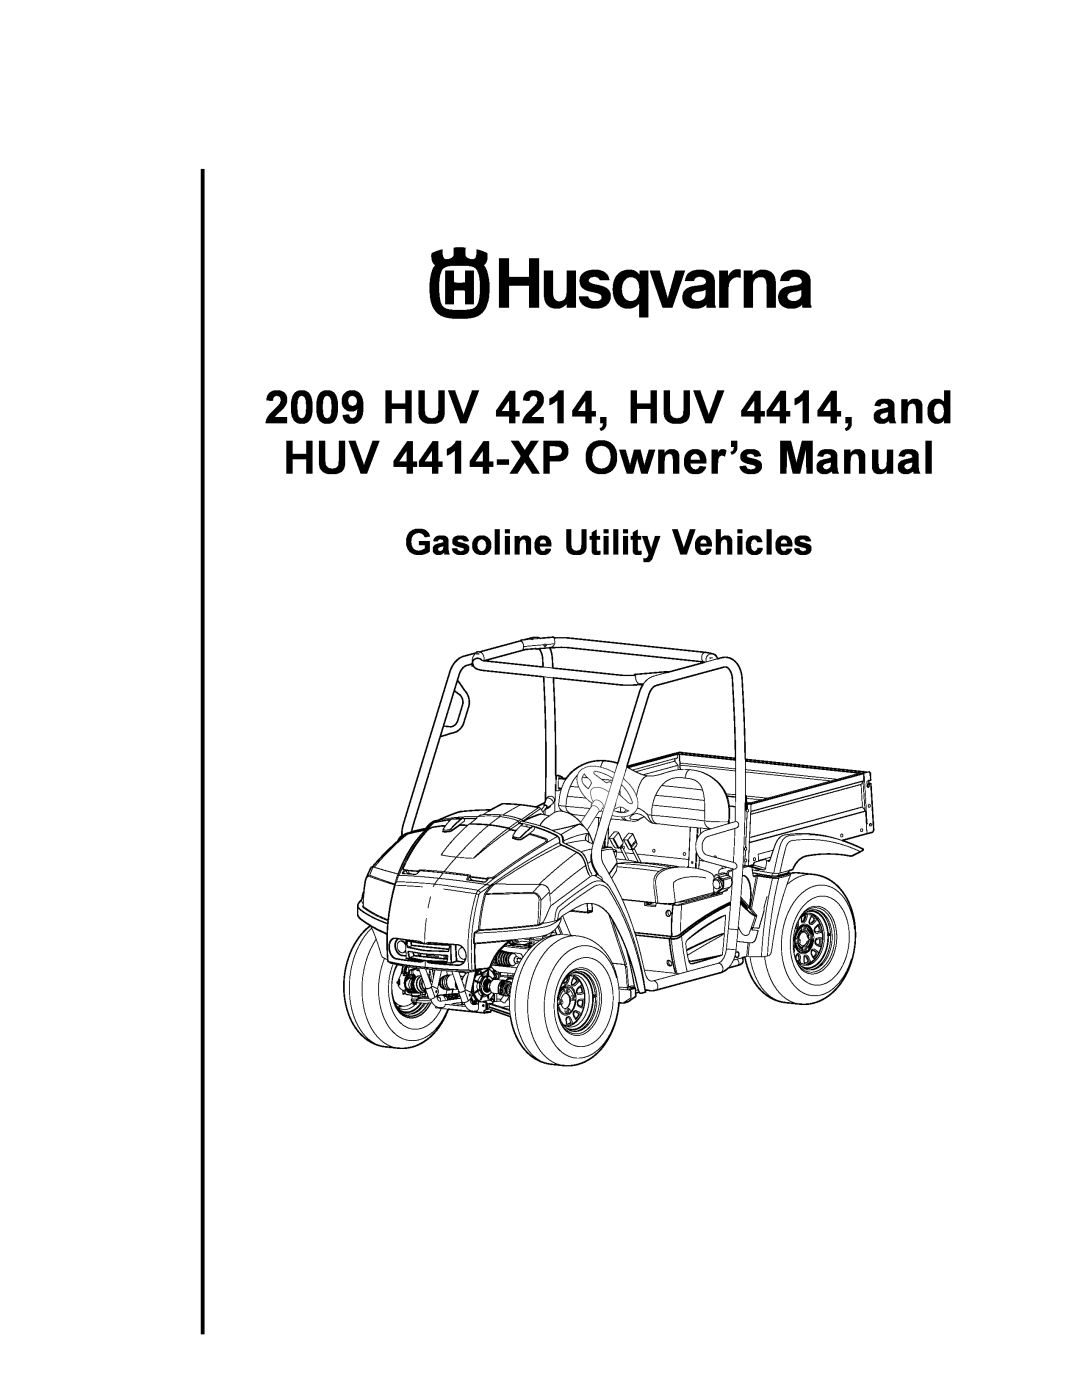 Husqvarna owner manual HUV 4214, HUV 4414, and HUV 4414-XP Owner’s Manual, Gasoline Utility Vehicles 